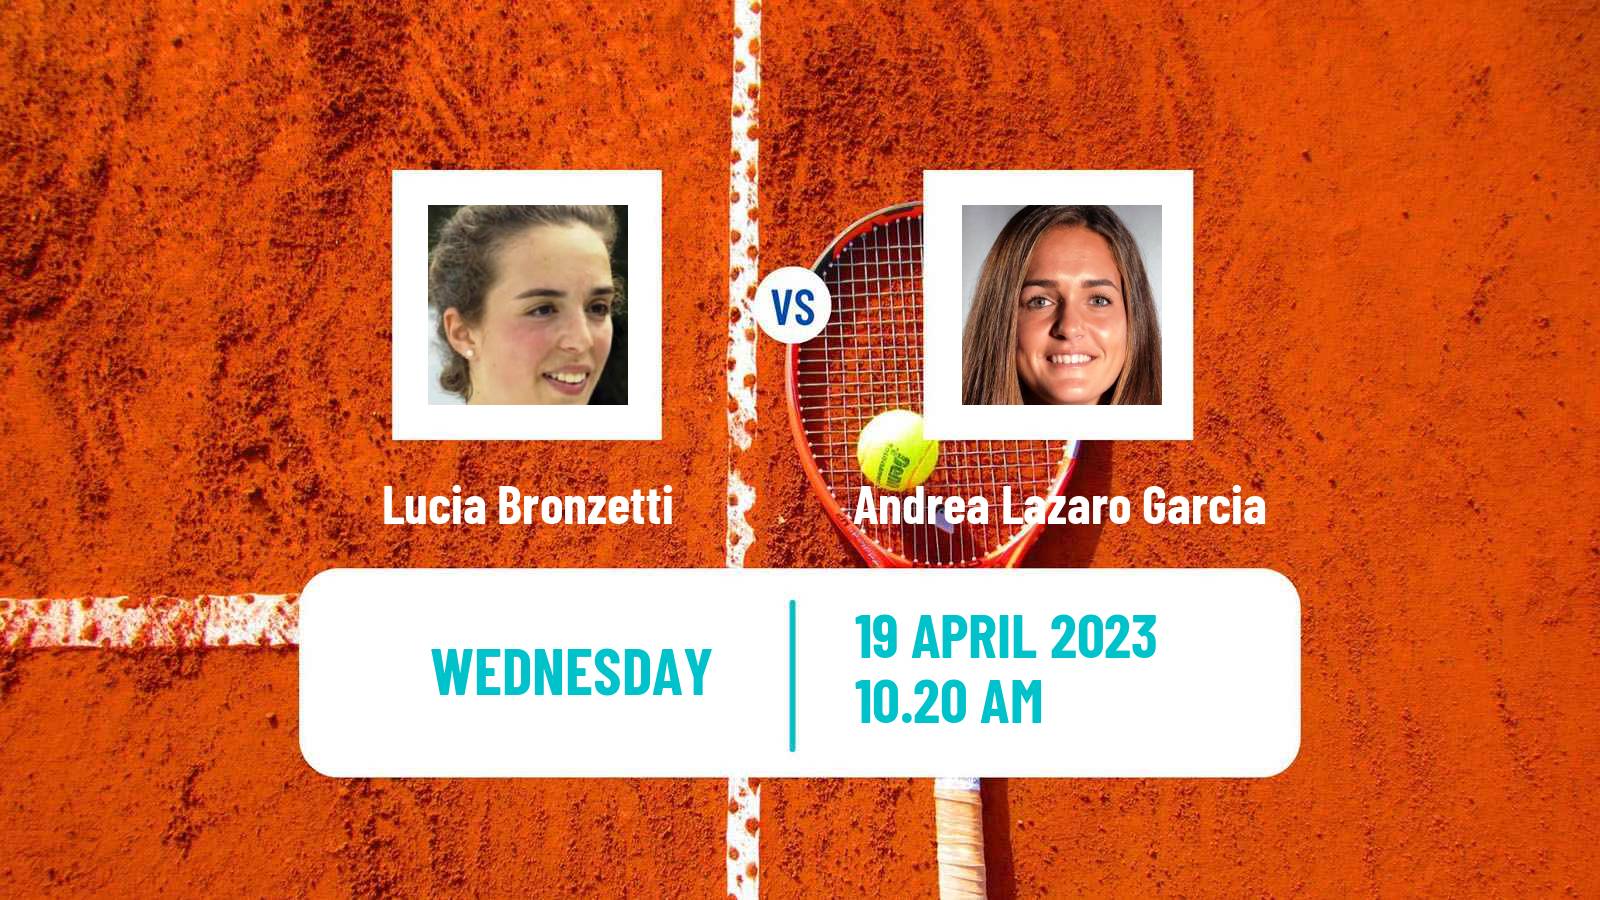 Tennis ITF Tournaments Lucia Bronzetti - Andrea Lazaro Garcia